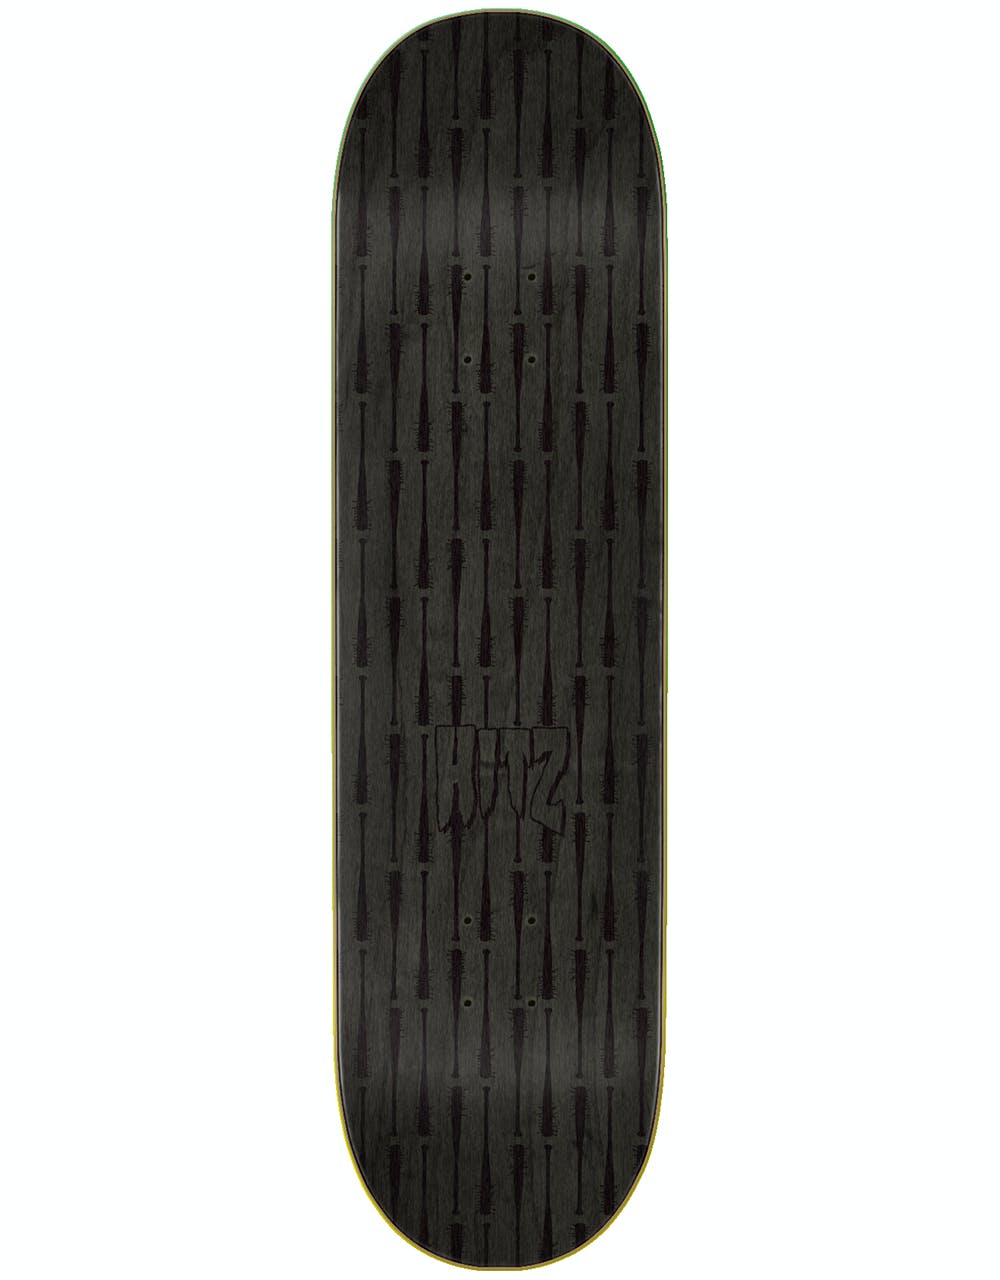 Creature Hitz Leather Skateboard Deck - 8.5"